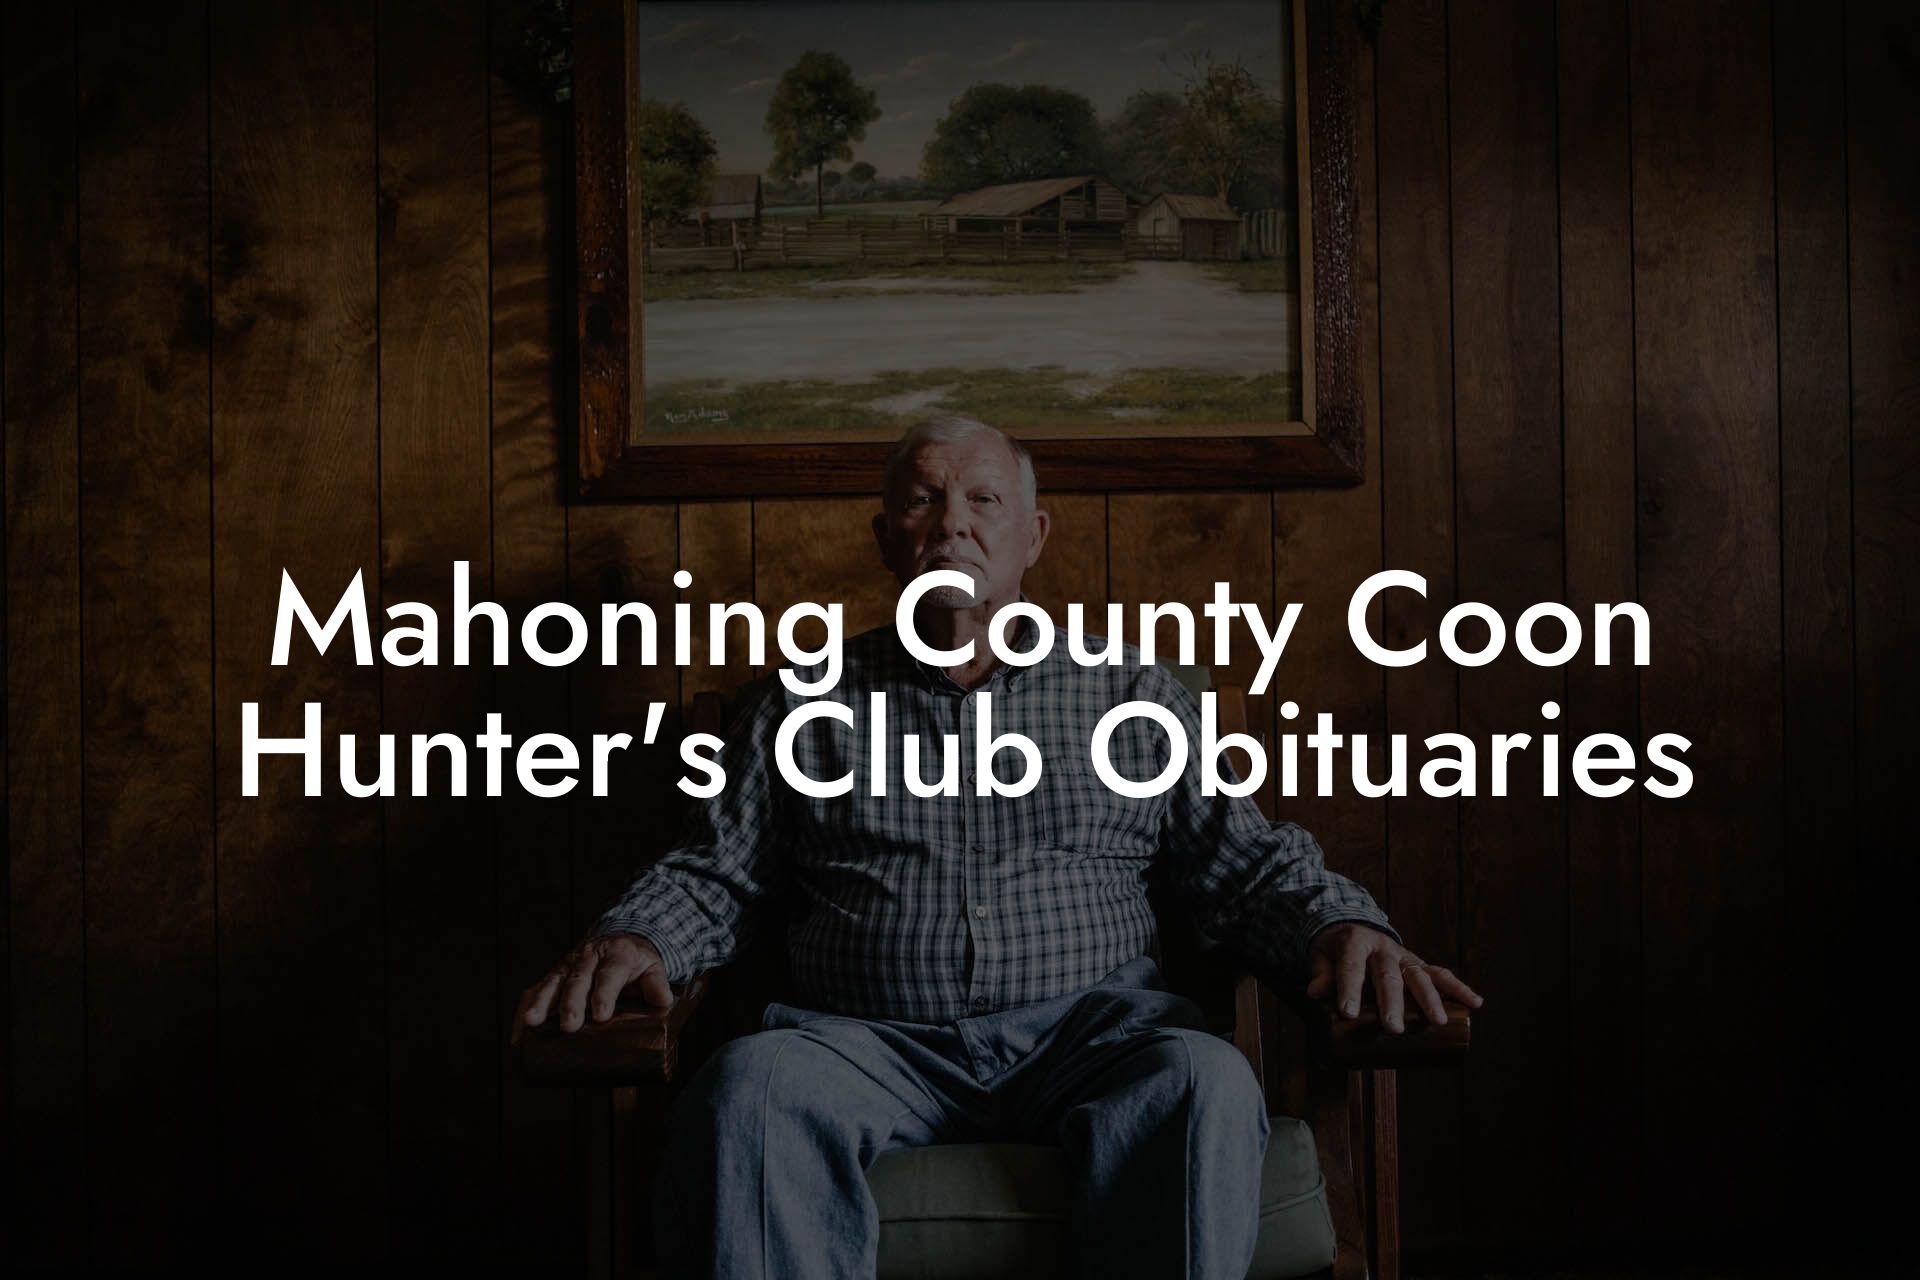 Mahoning County Coon Hunter's Club Obituaries